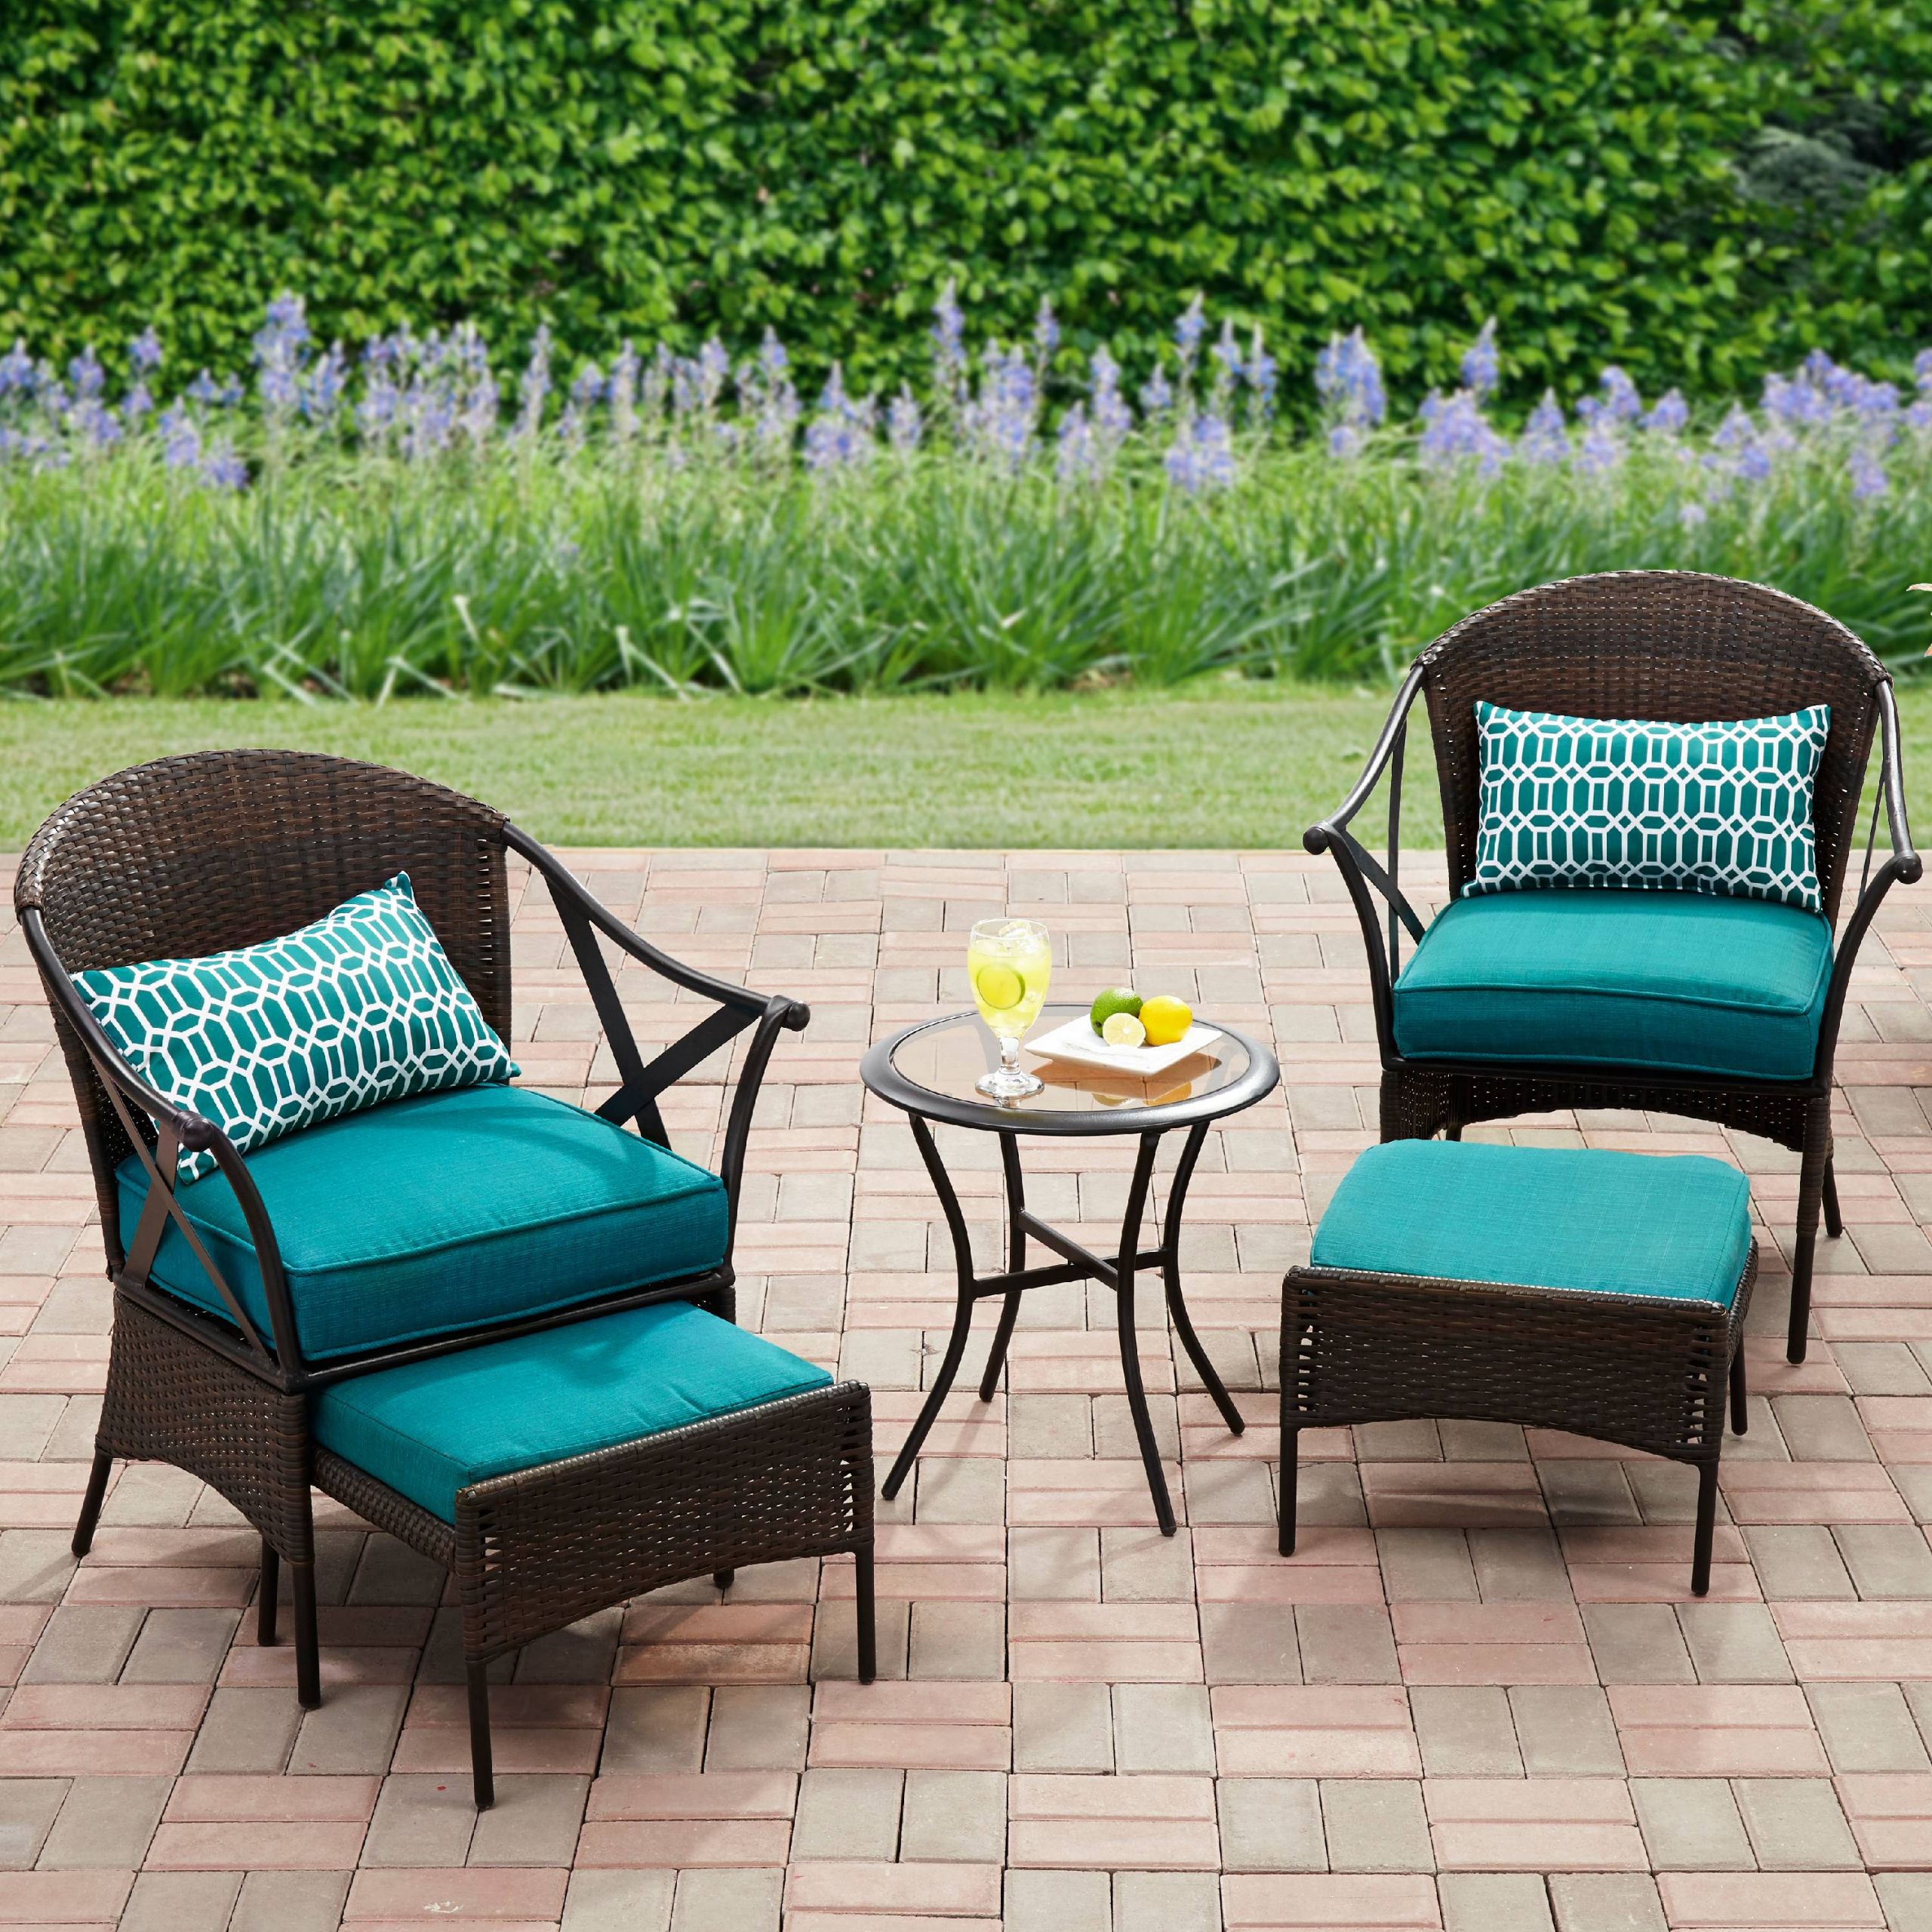 Backyard Furniture Sets
 Outdoor Furniture Set 5Pc Deck Patio Garden Table Teal